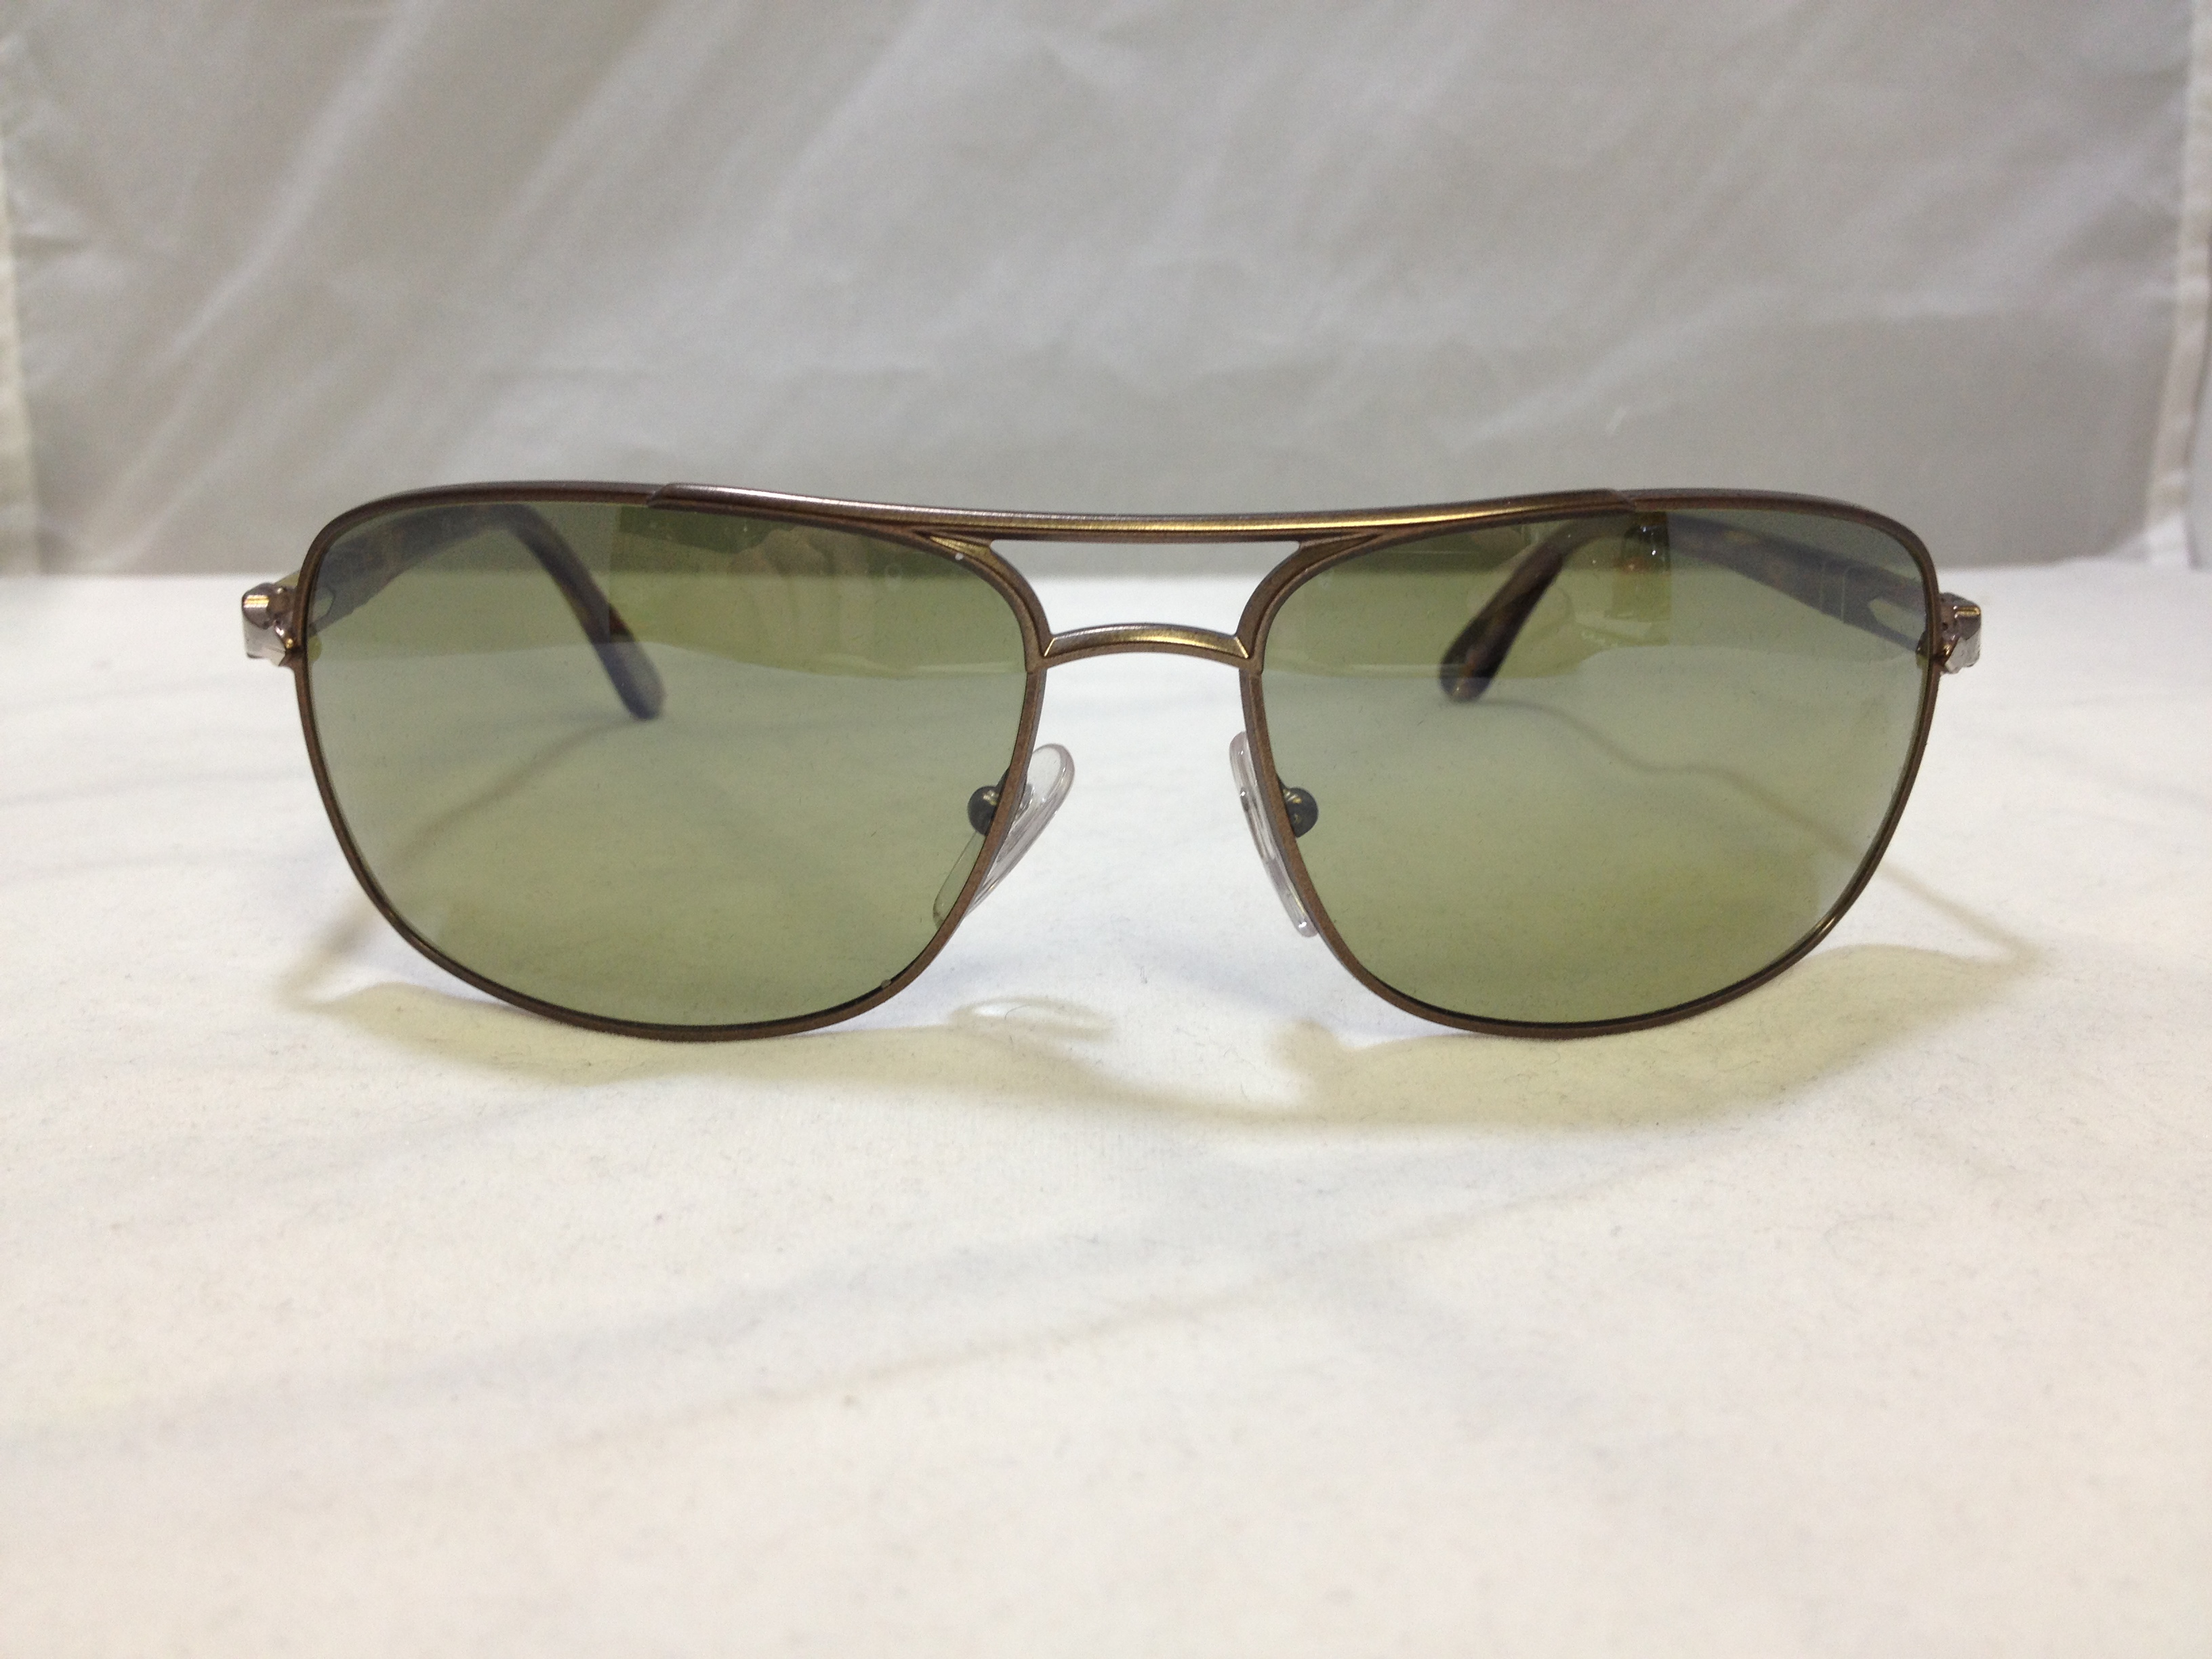 2 Pairs of NIB Persol Sunglasses - 2405 & 2407 | Styleforum